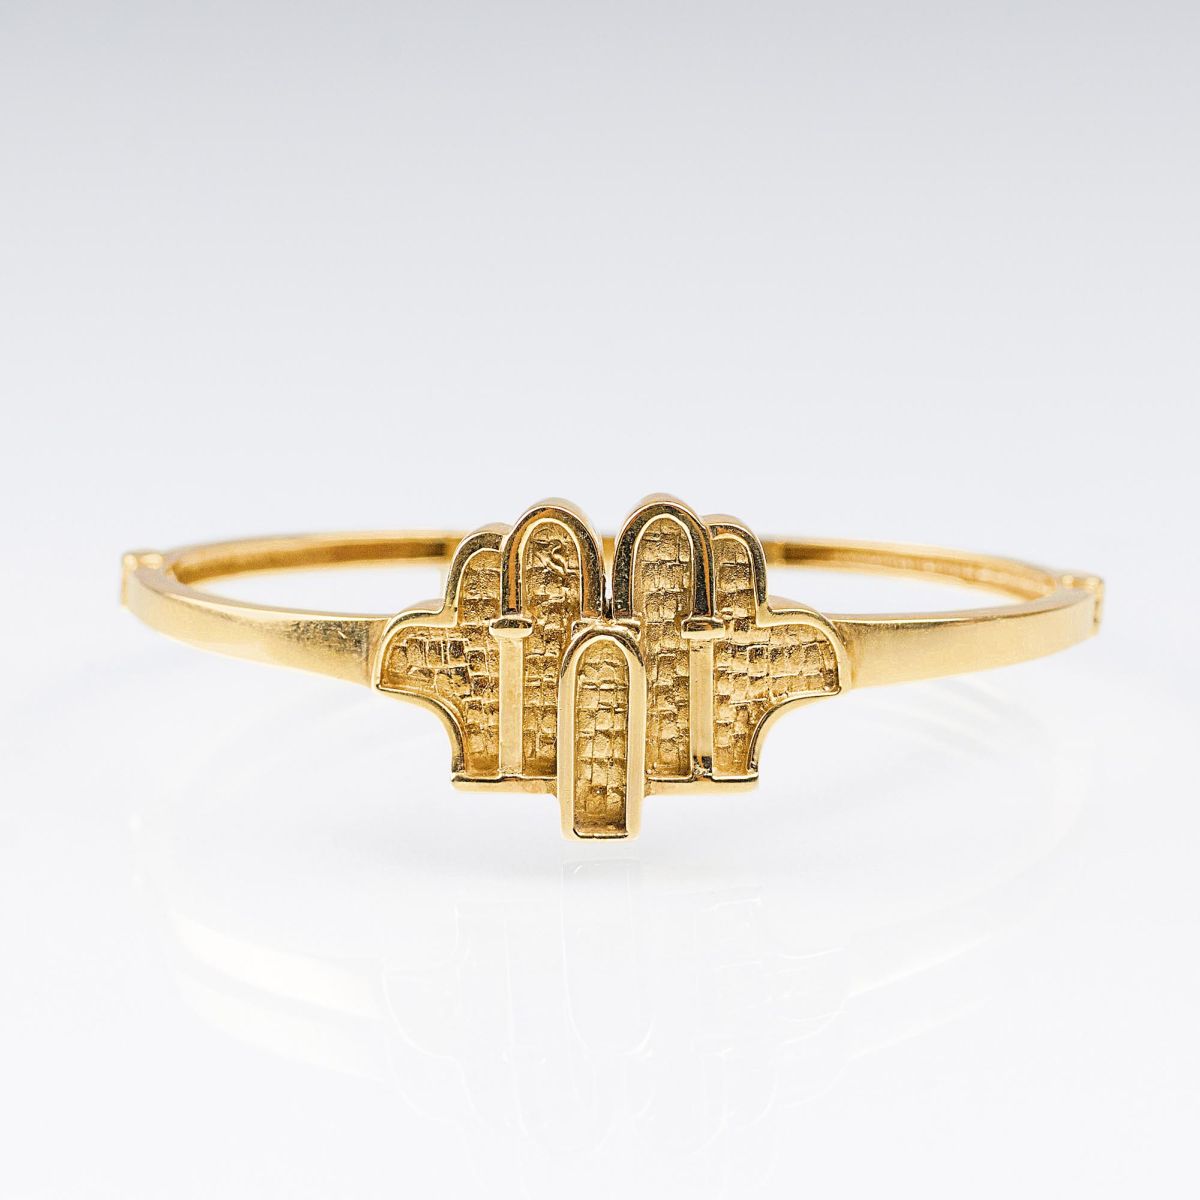 A Gold Bangle Bracelet with temples motive